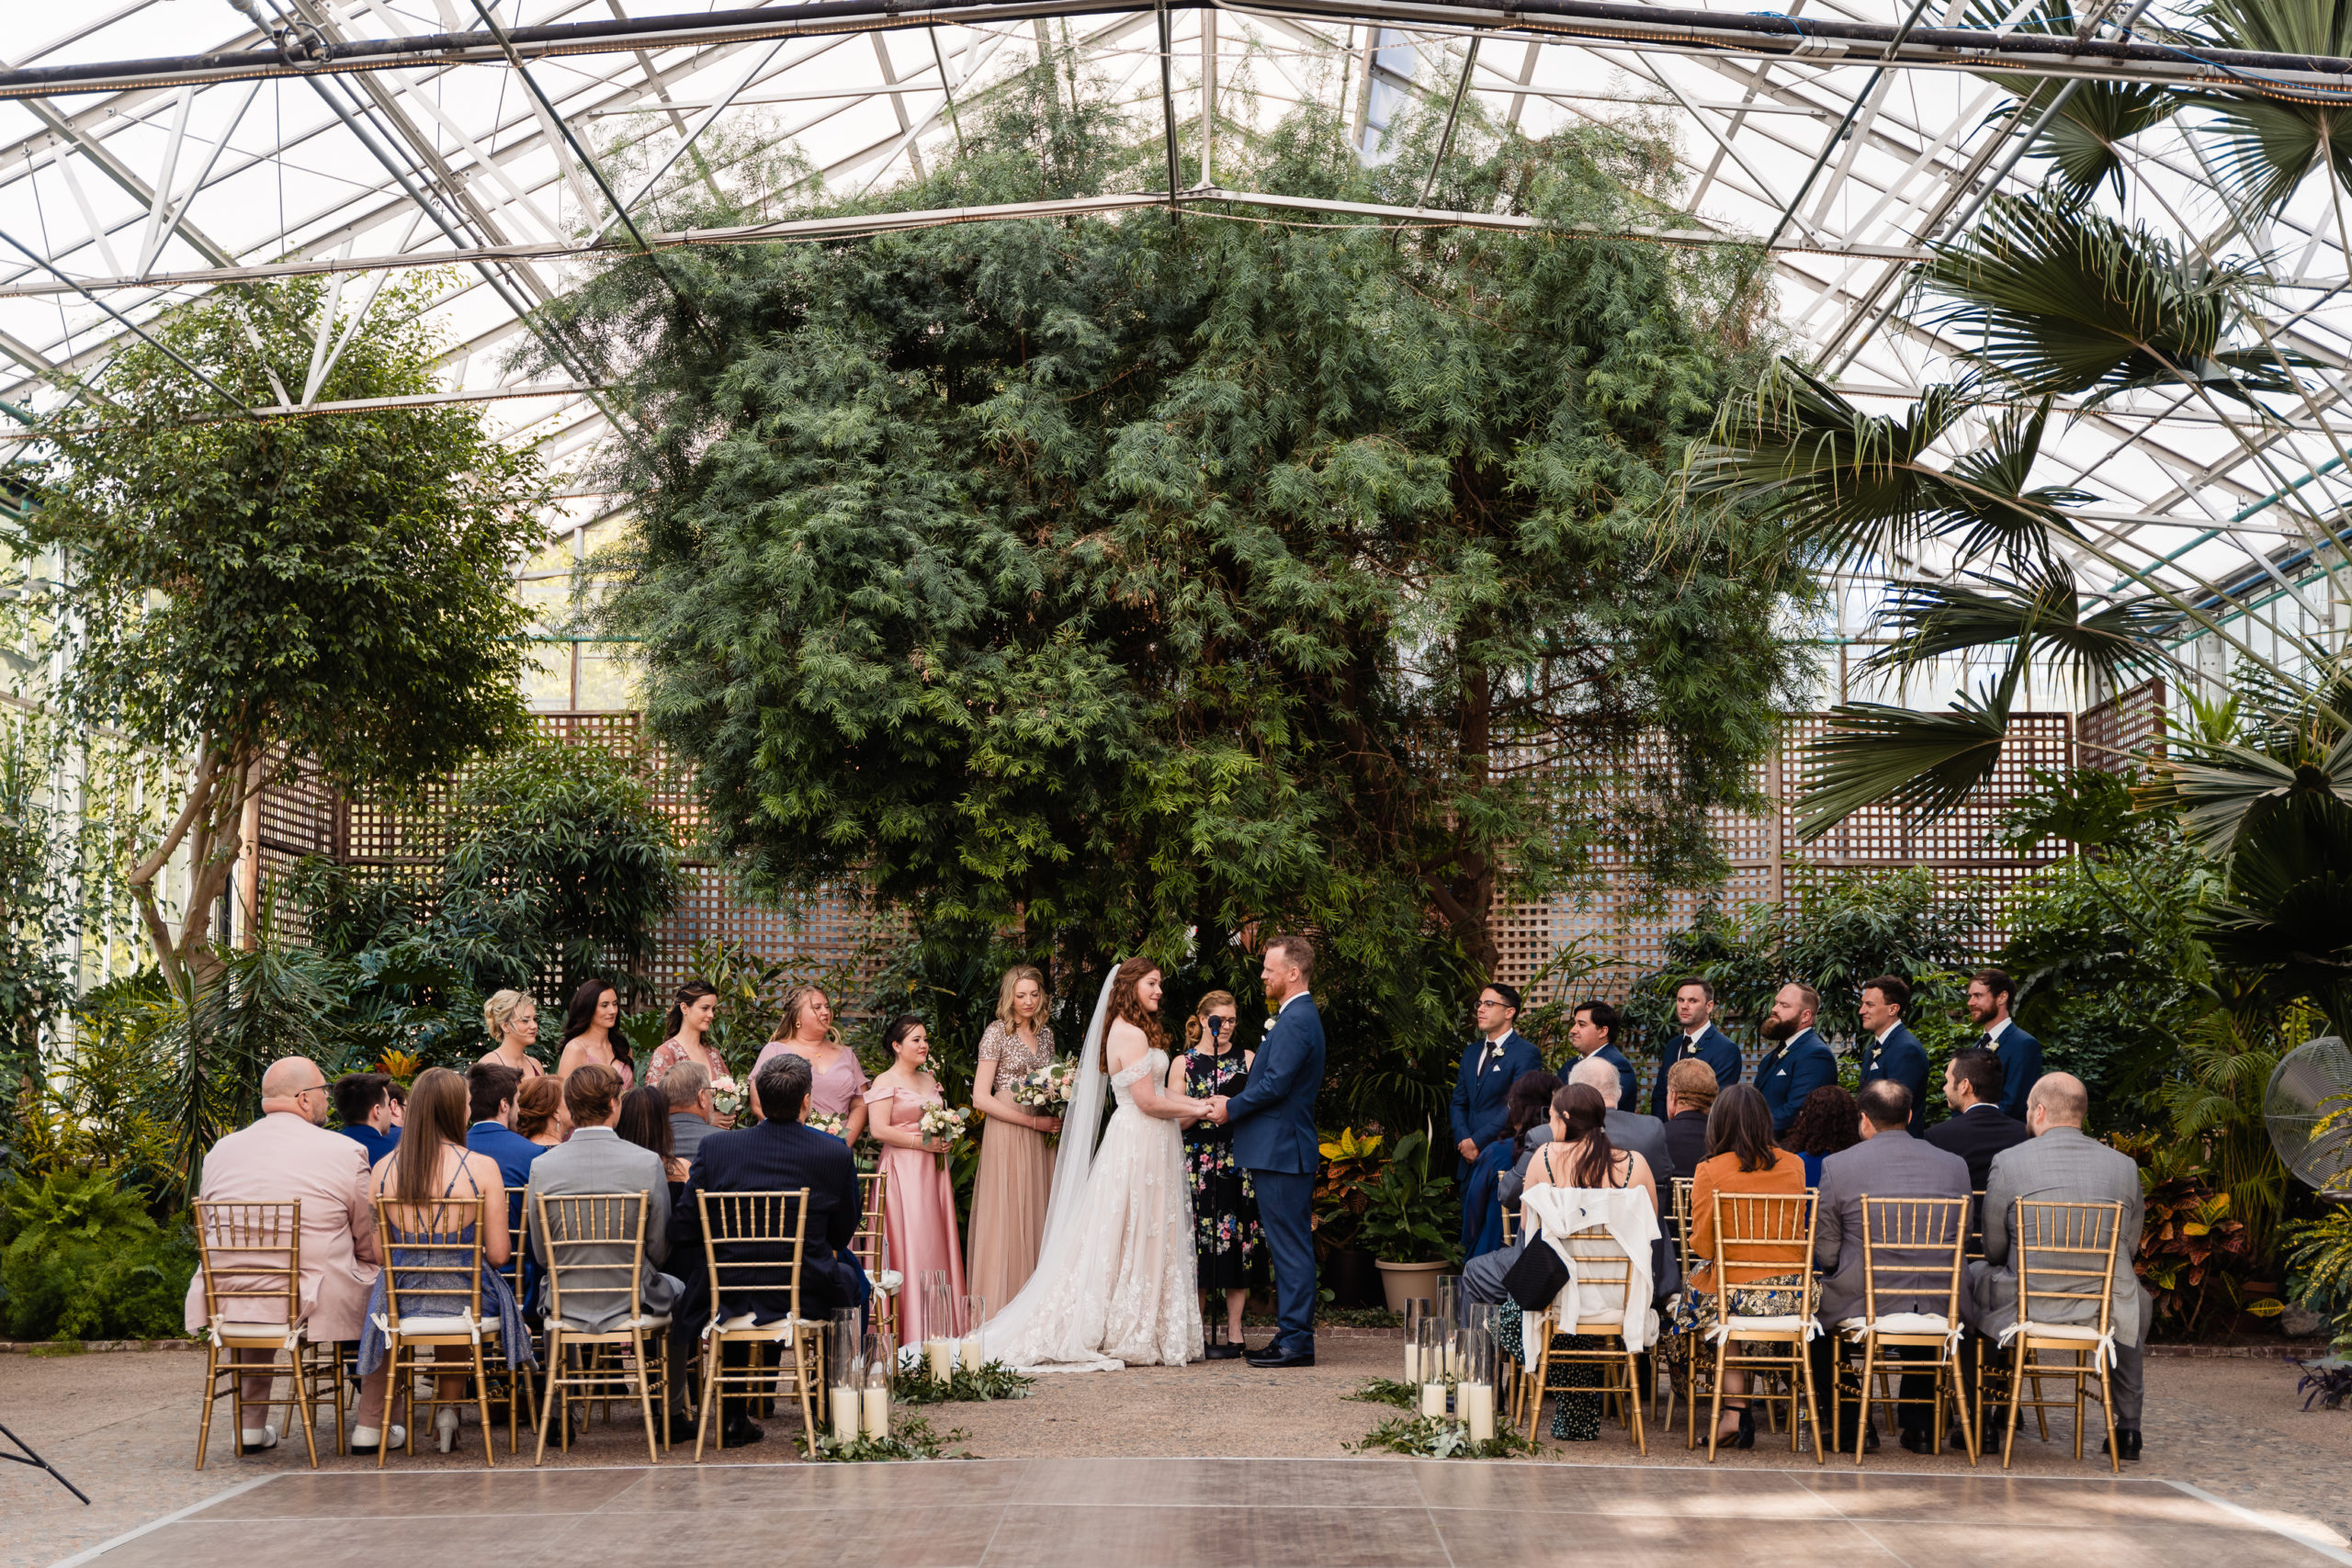 Wedding ceremony at Fairmount Park Horticultural Center photographed by philadelphia based salt and sonder studio